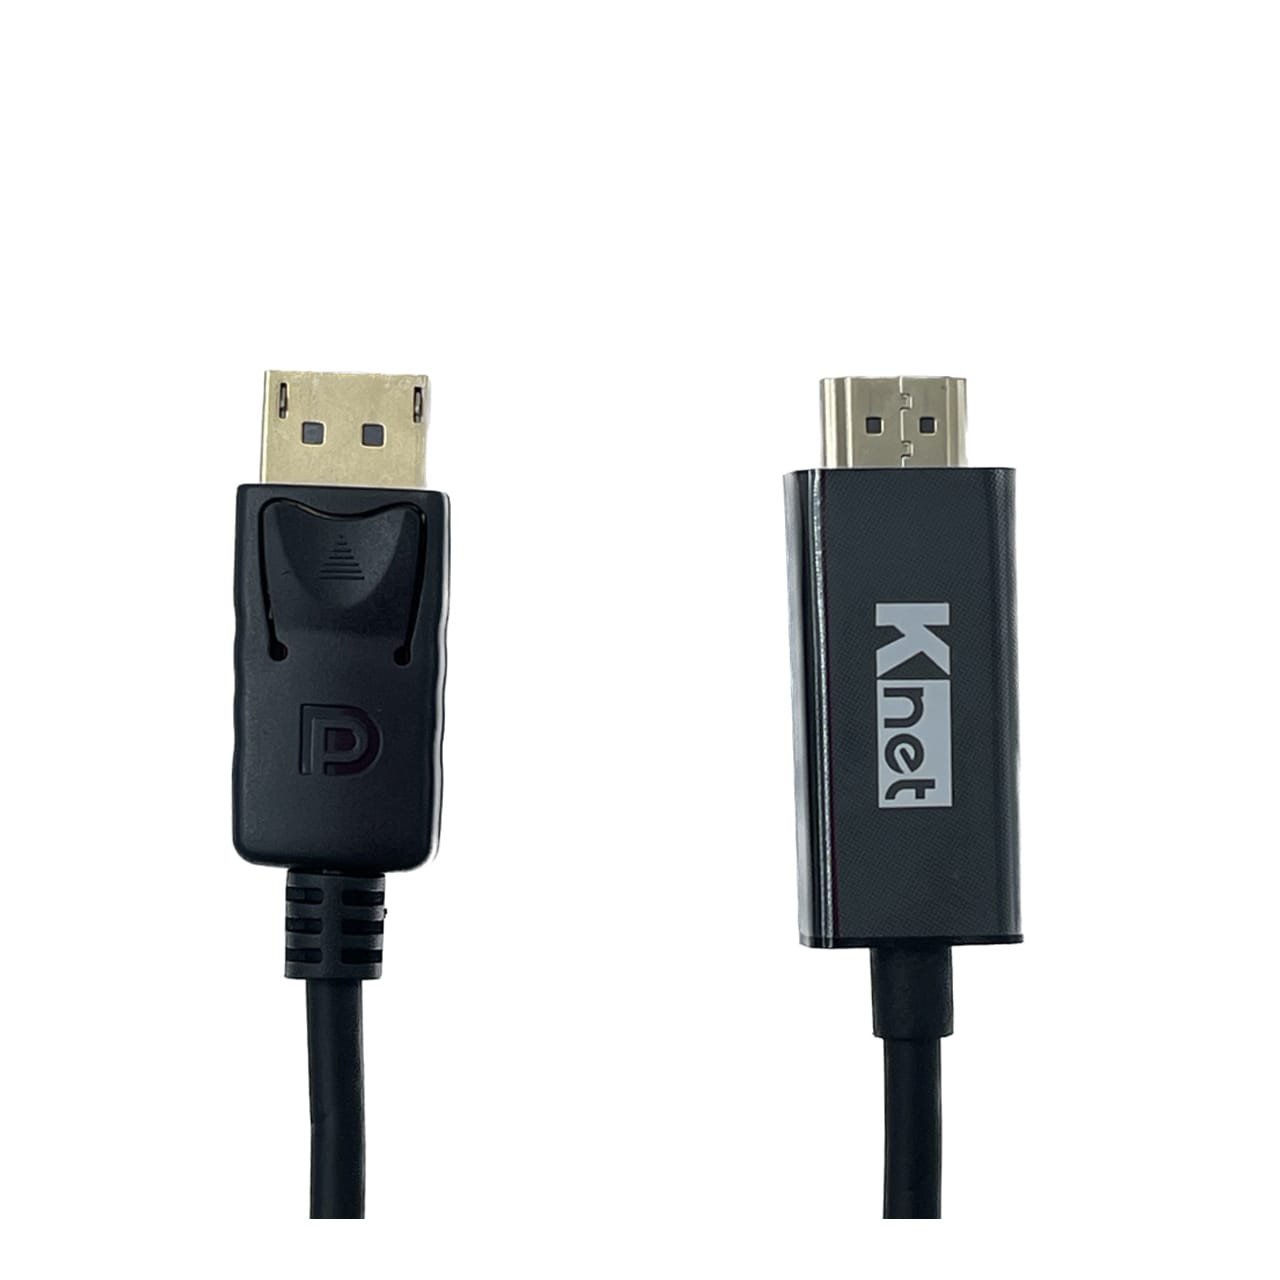 کابل تبدیل DP به HDMI کی نت ورژن 1.2 مدل K-CODP2HD15 به طول 1.5 متر